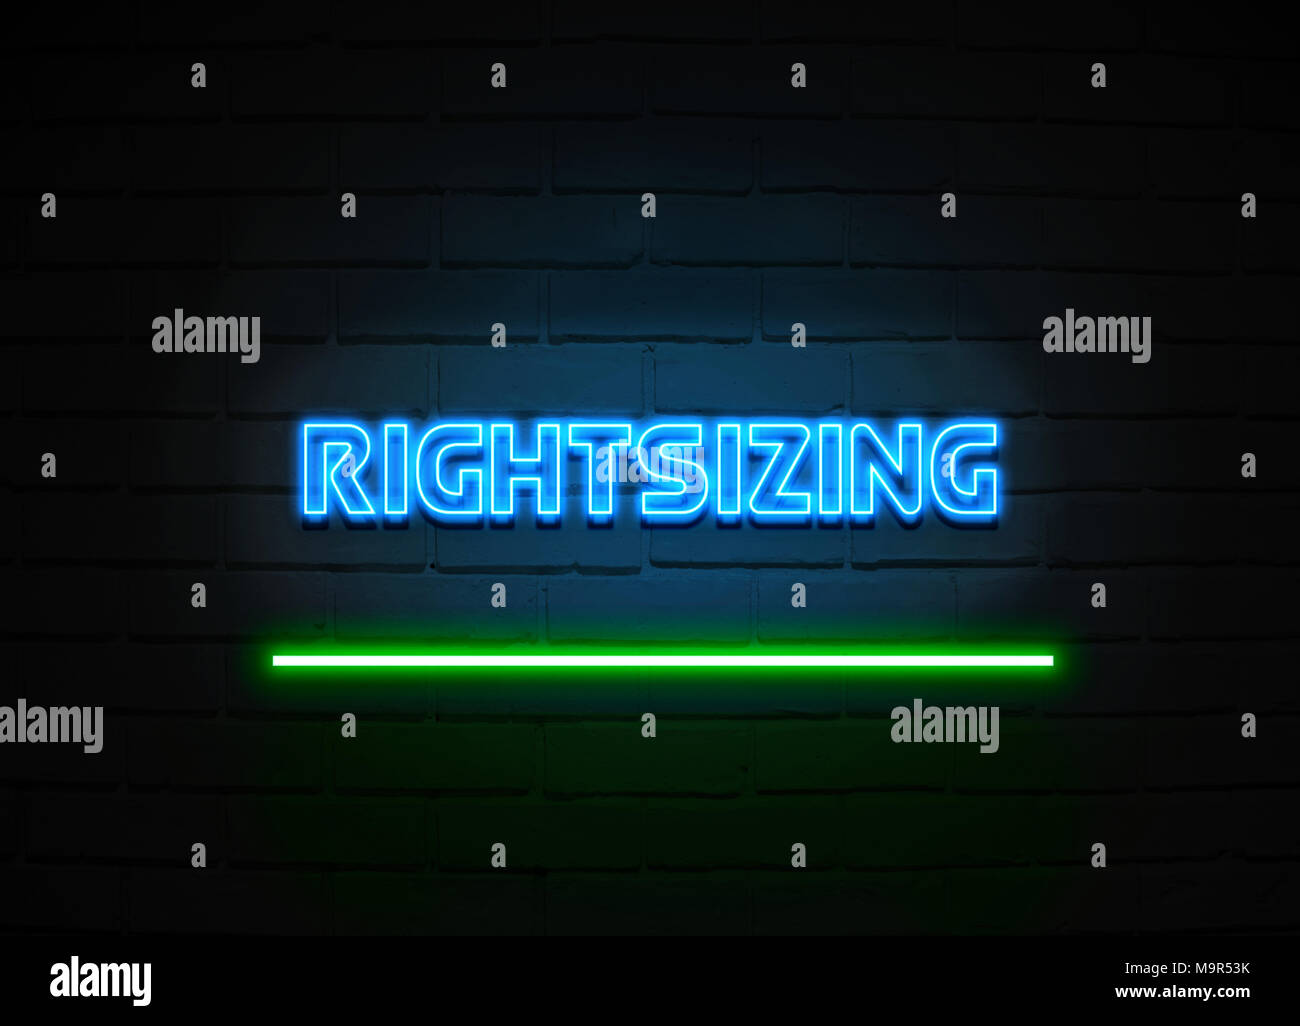 Rightsizing Leuchtreklame - glühende Leuchtreklame auf brickwall Wand - 3D-Royalty Free Stock Illustration dargestellt. Stockfoto